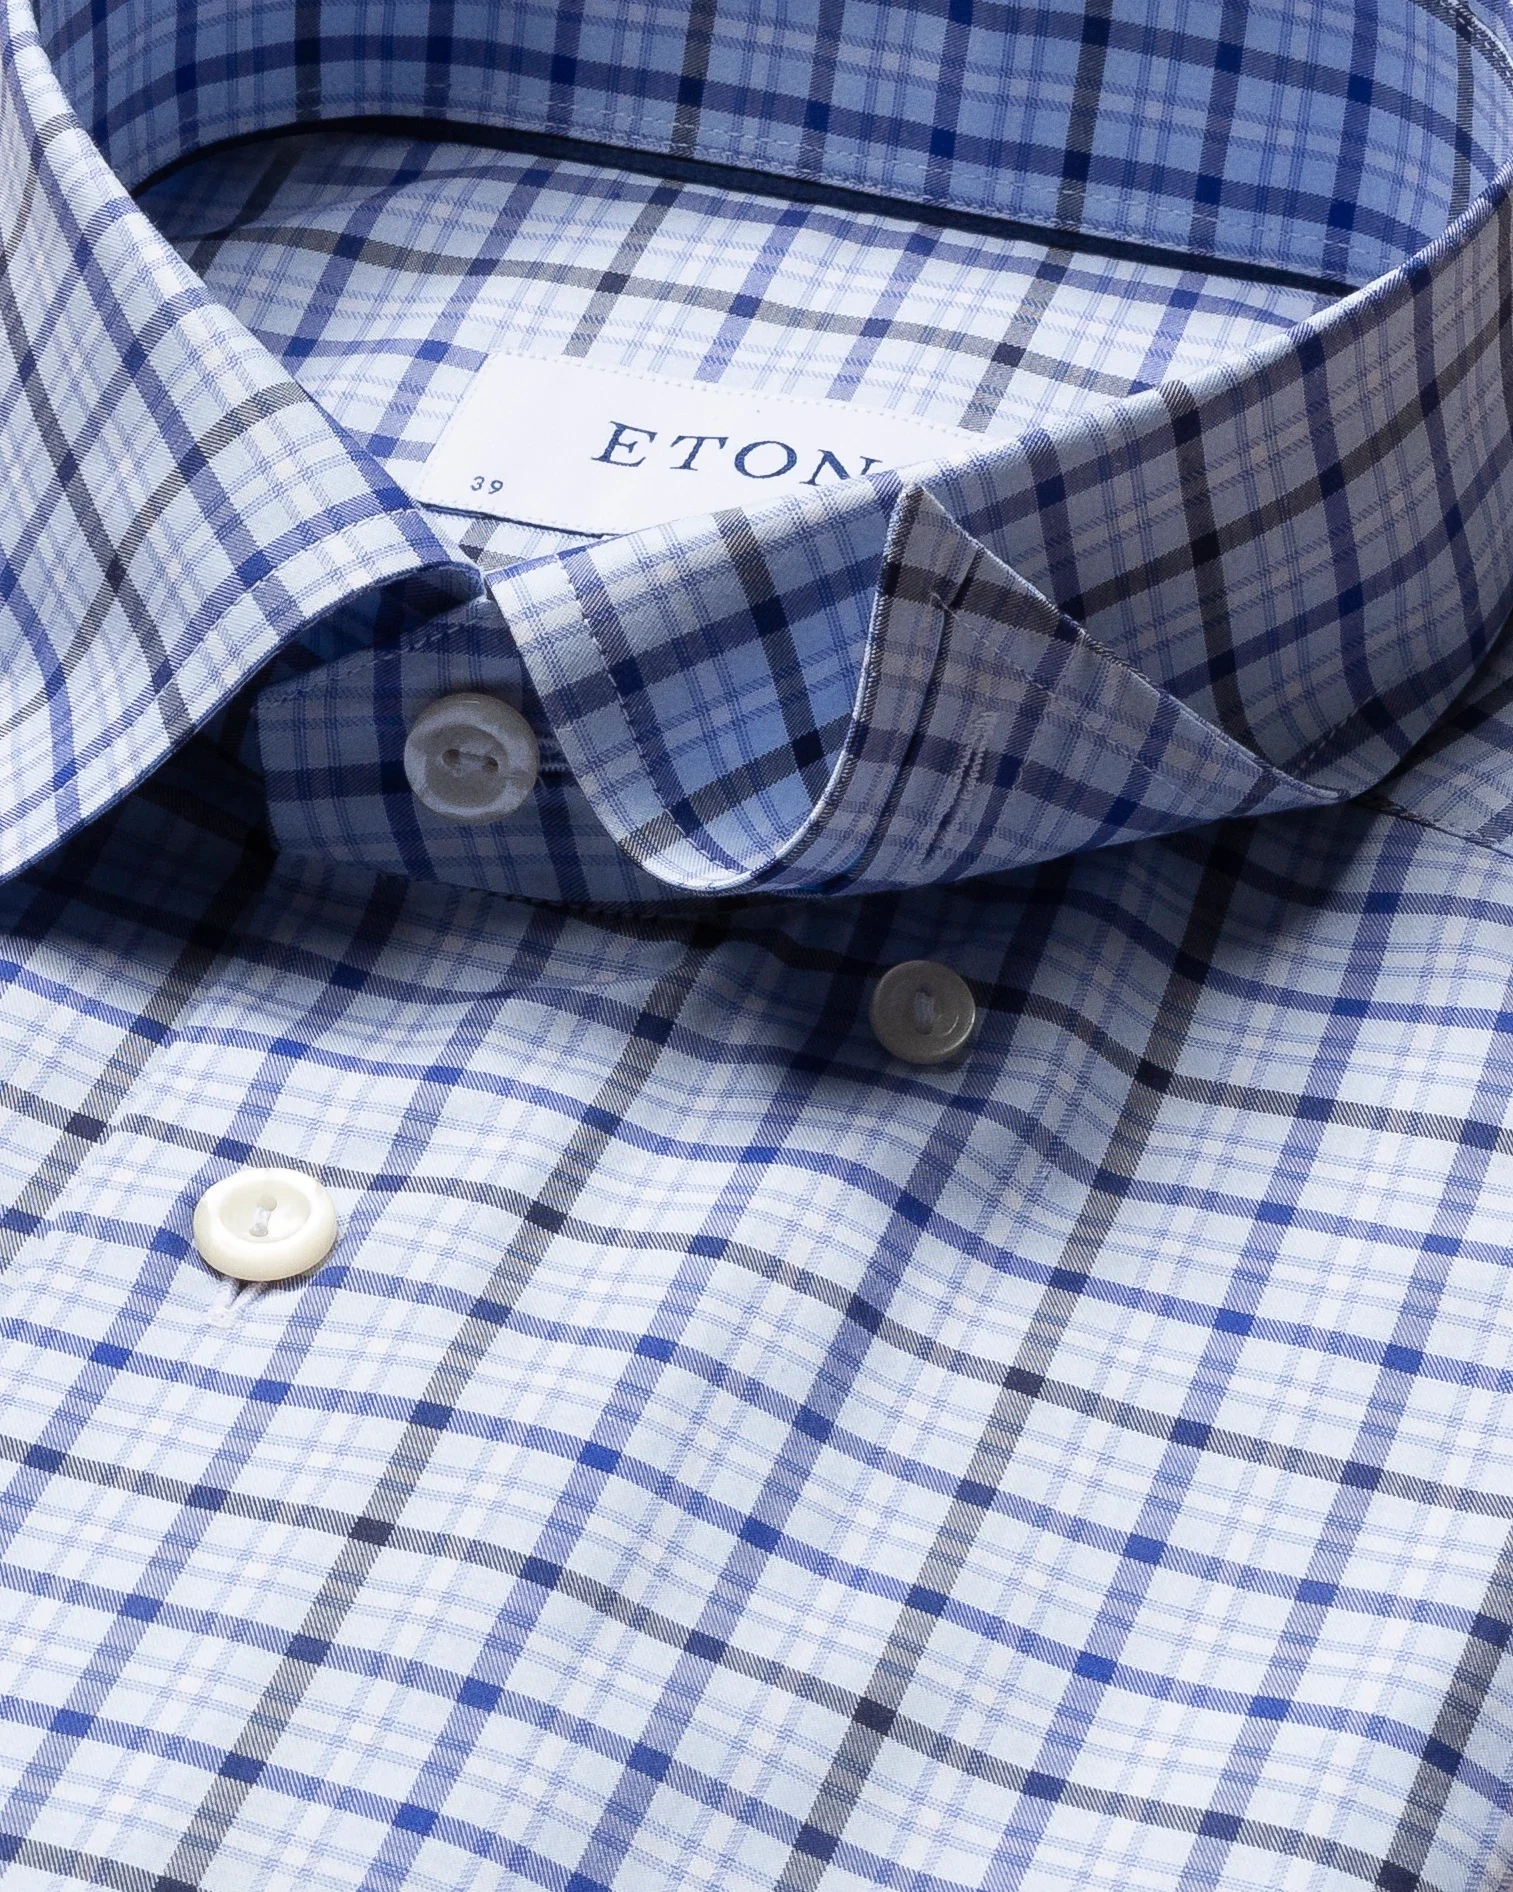 Eton - blue checks fine twill shirt